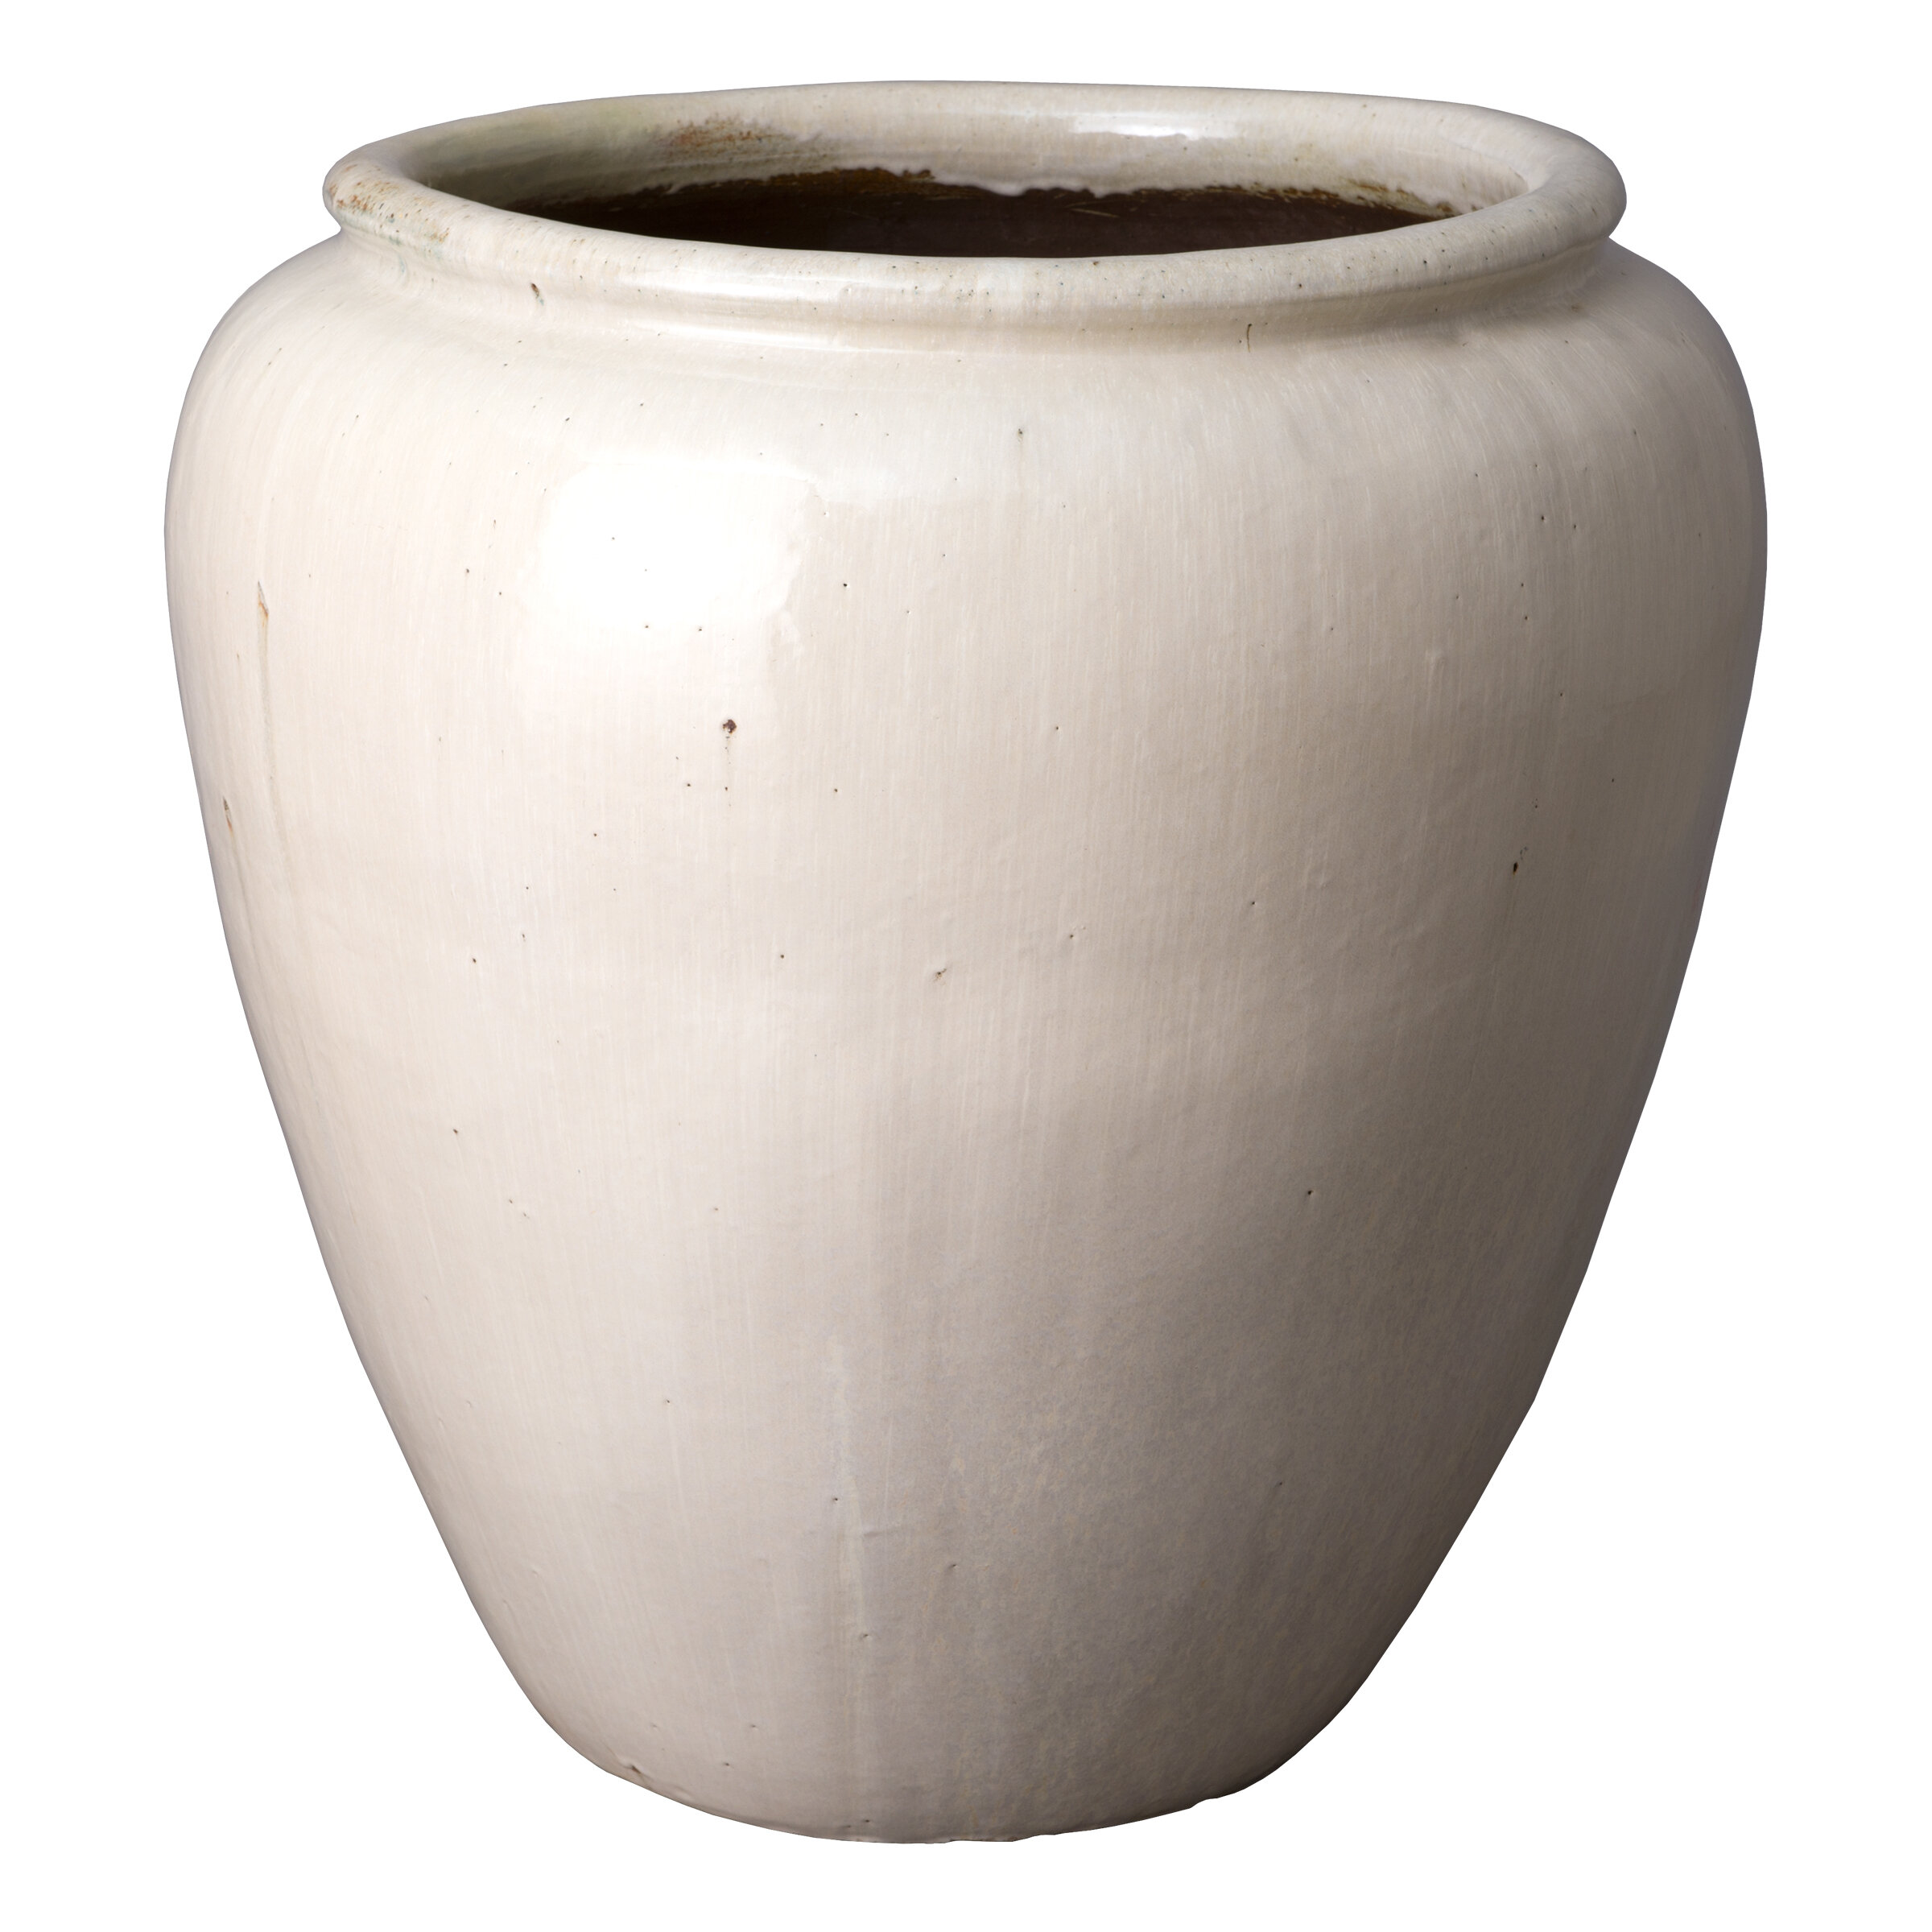 Darby Home Co Engel Round Ceramic Pot Planter